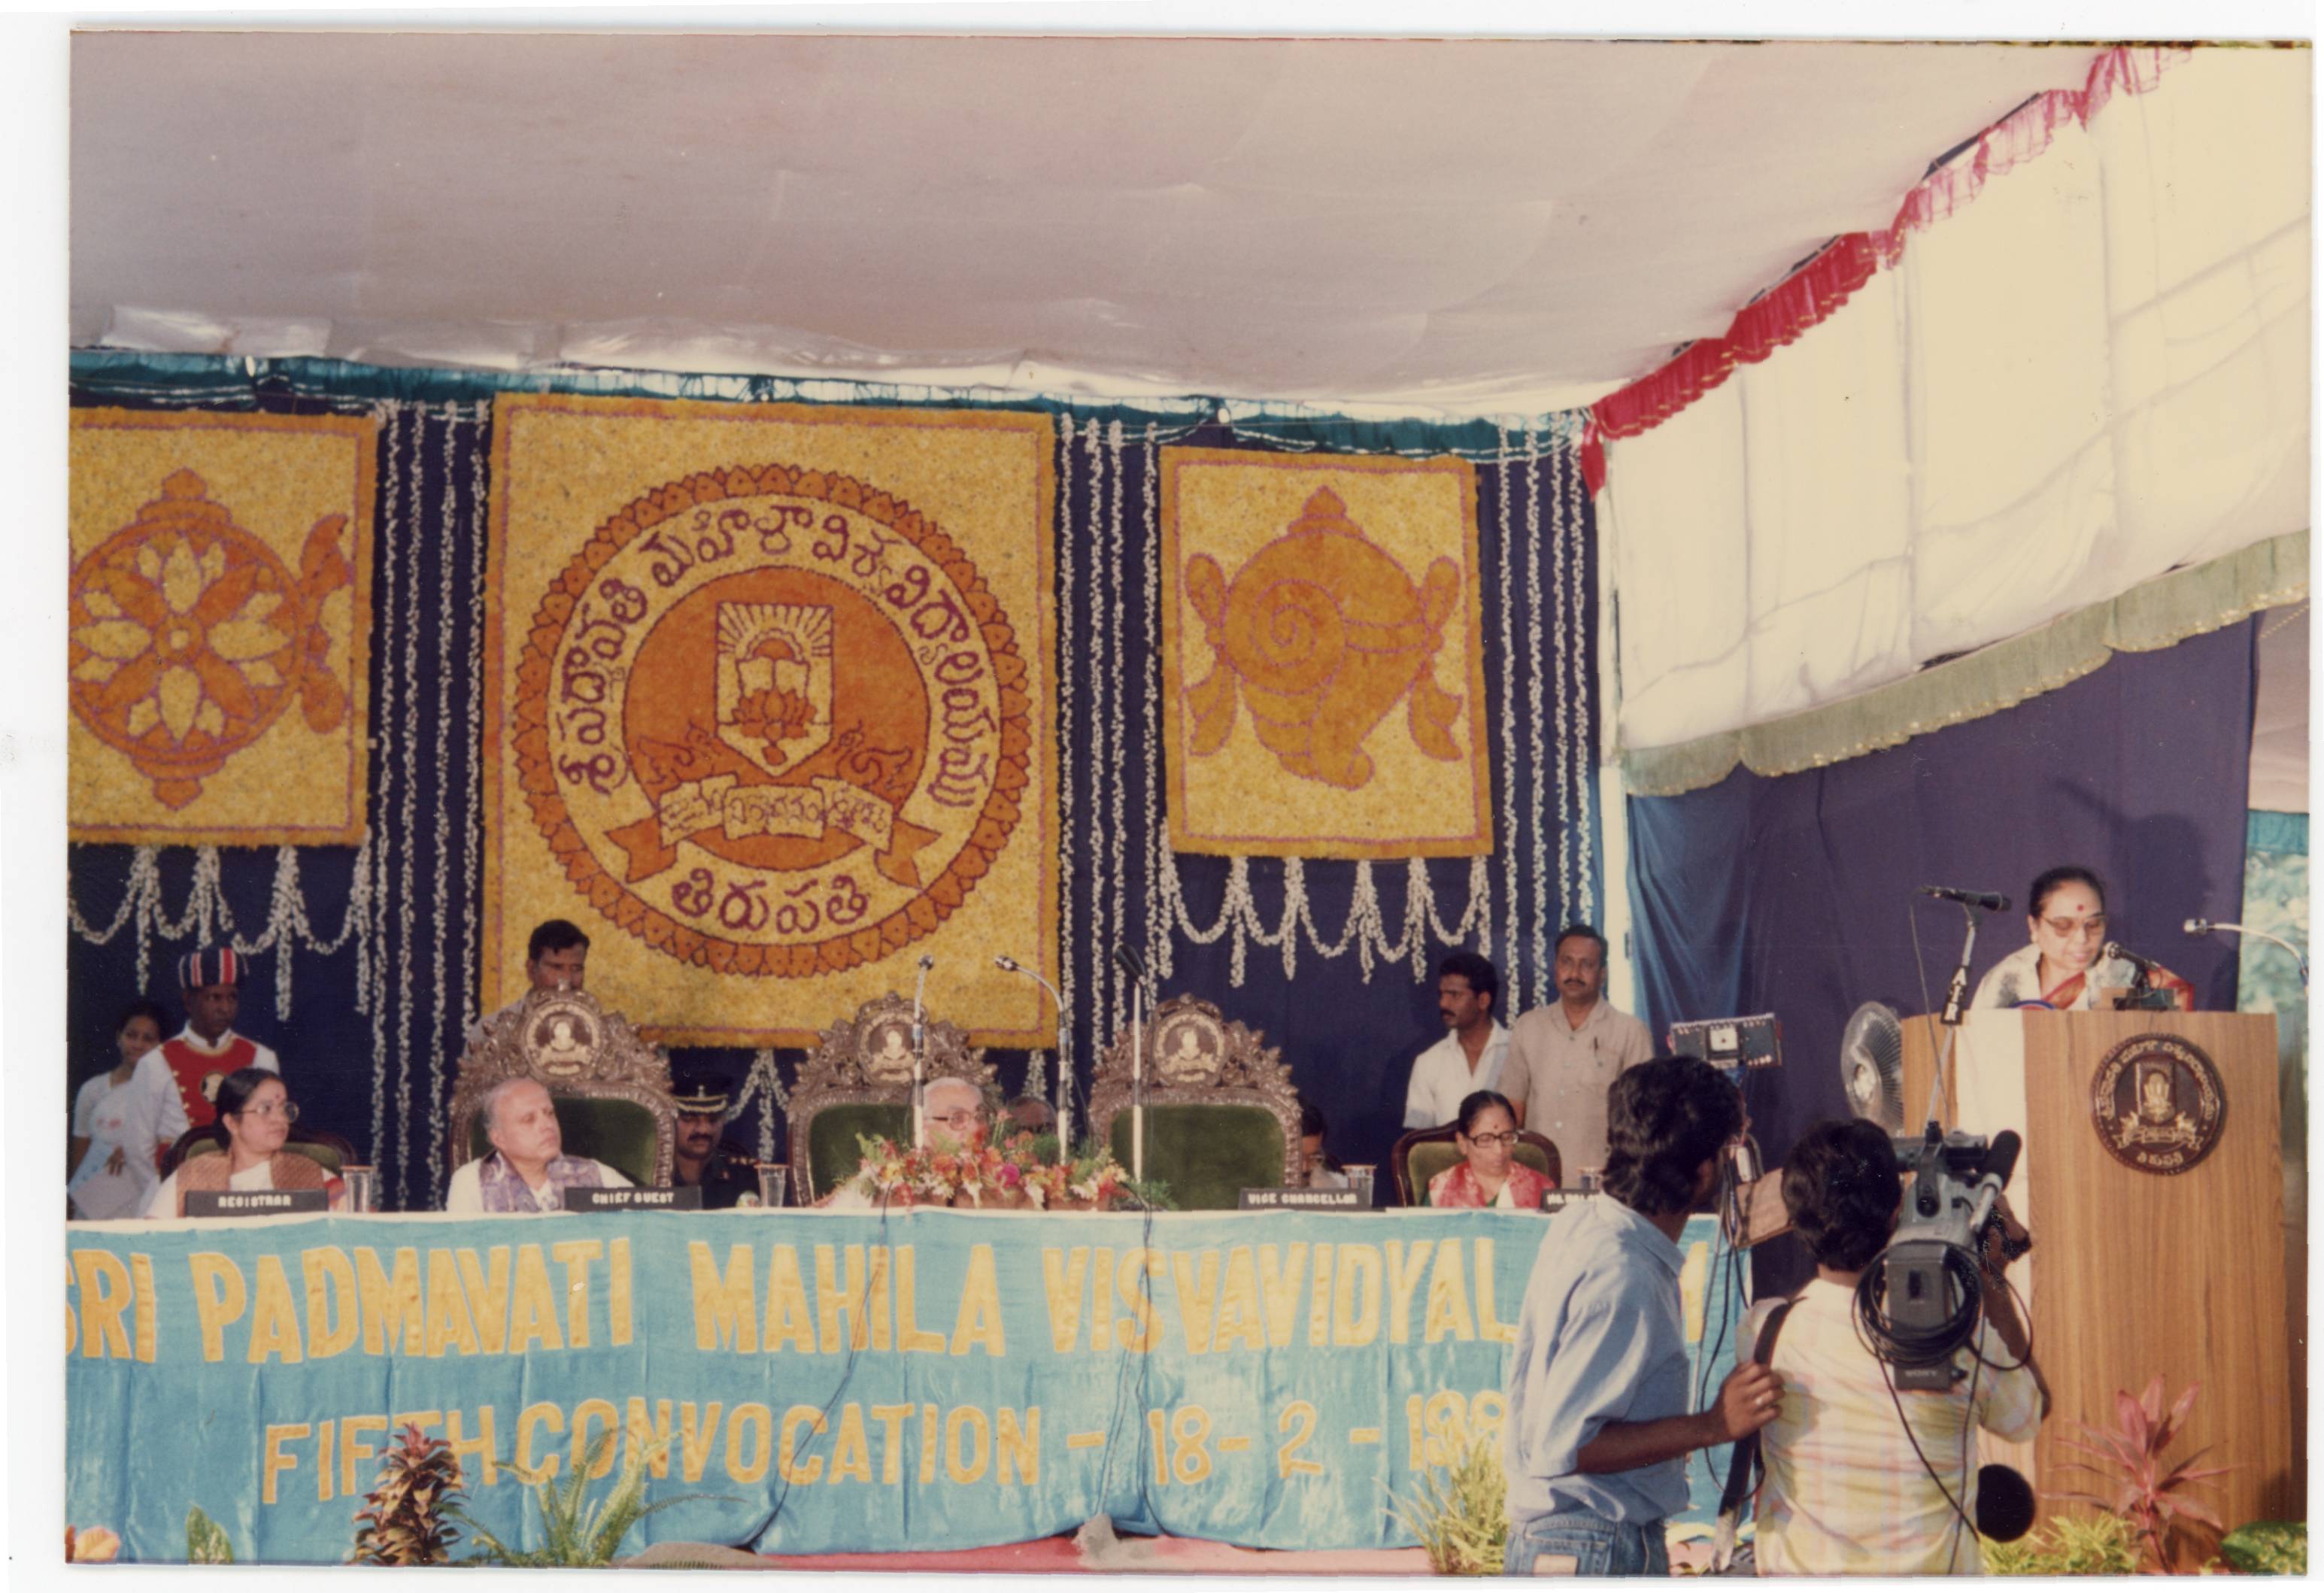 Shri. Padmavati Mahila Visvavidyalayam Fifth Convocation, Tirupati and Photos from Indo-American Society Meeting, Bombay